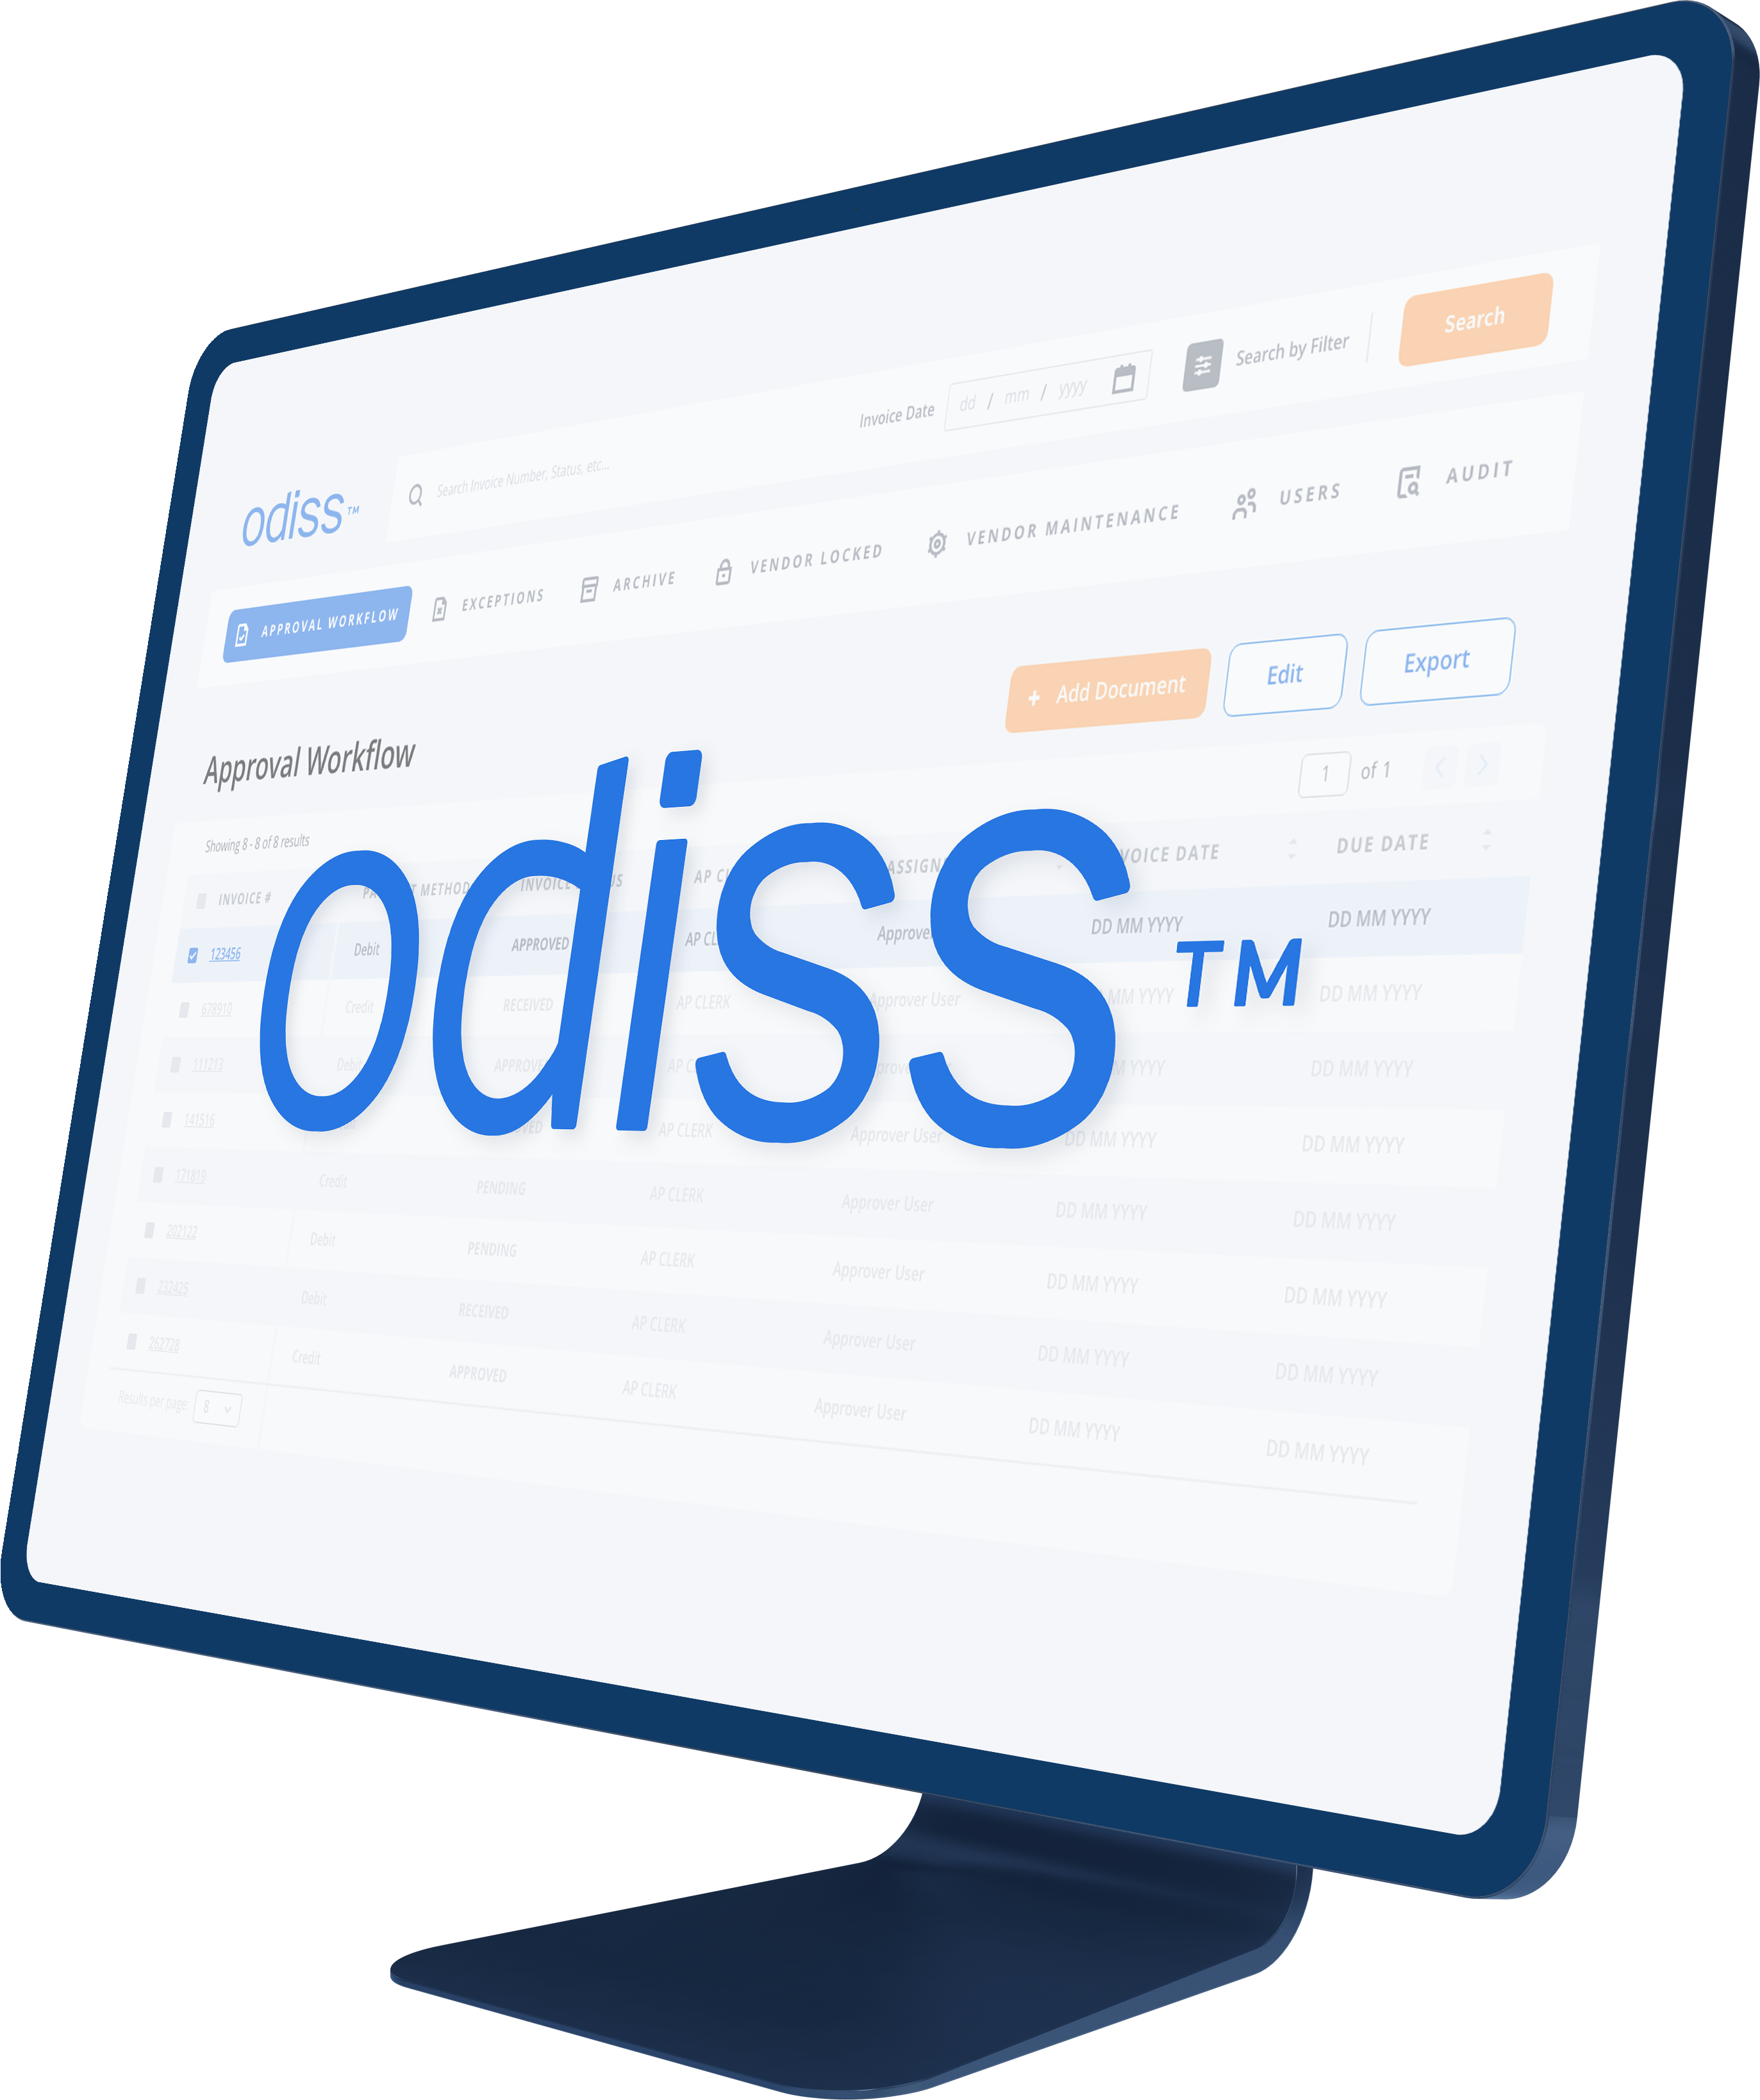 Odiss_Monitor Image_Side